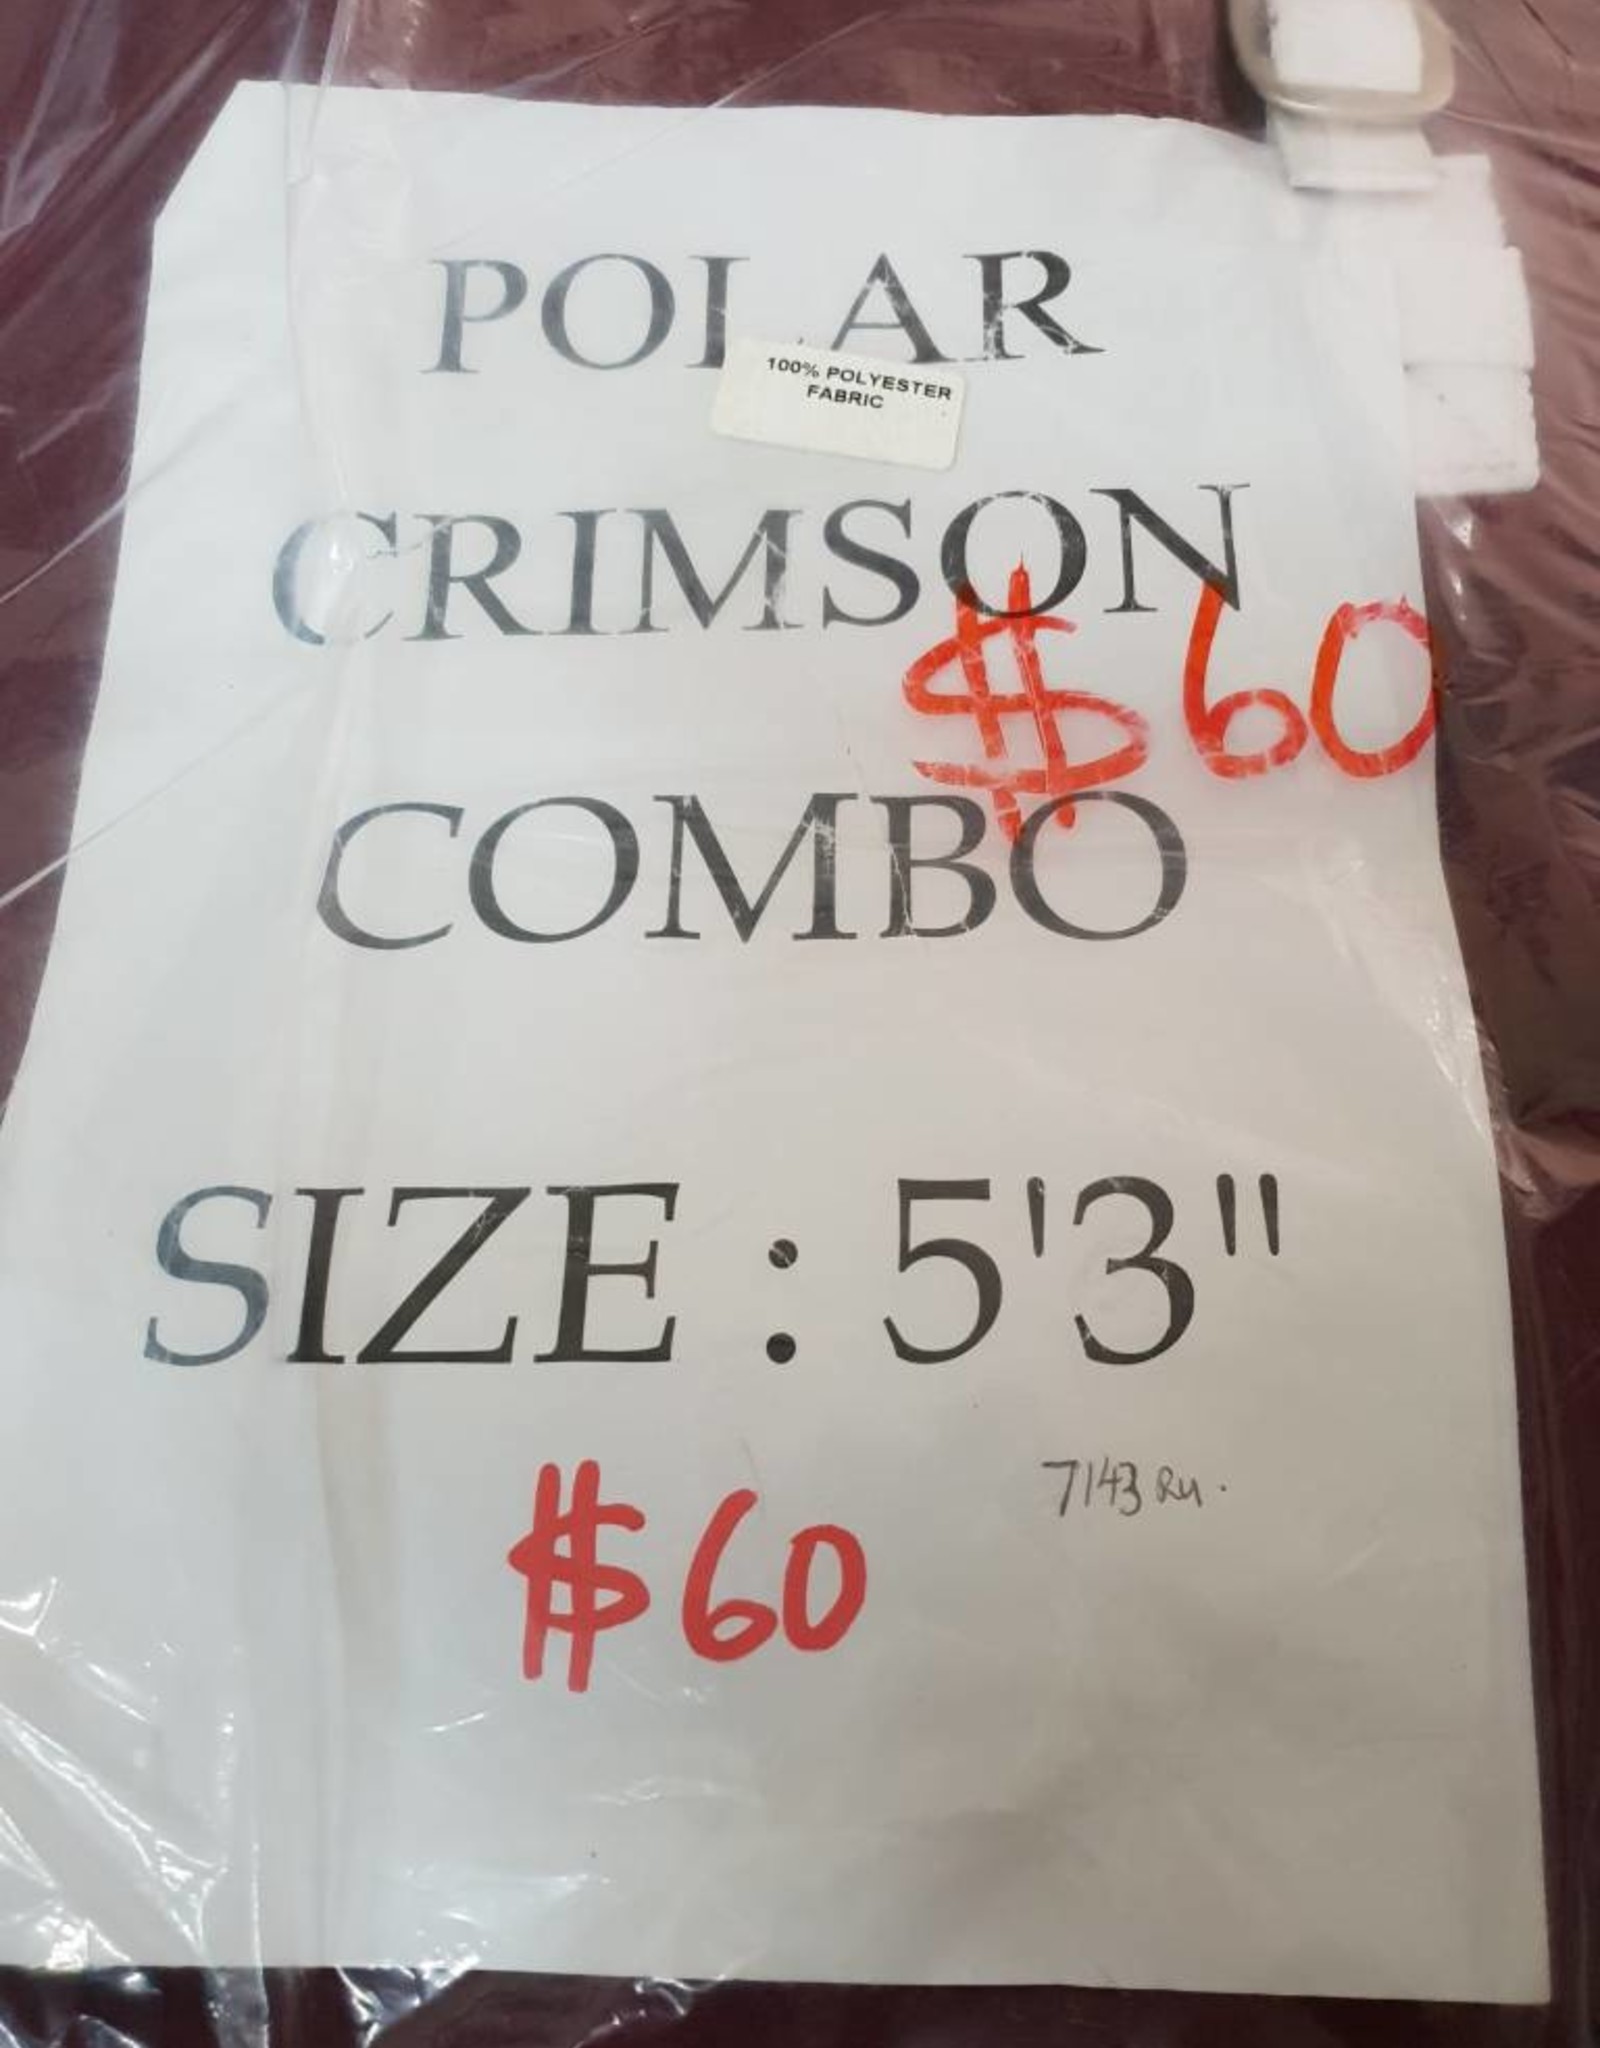 Polar Fleece Combo - Crimson - 5'3"